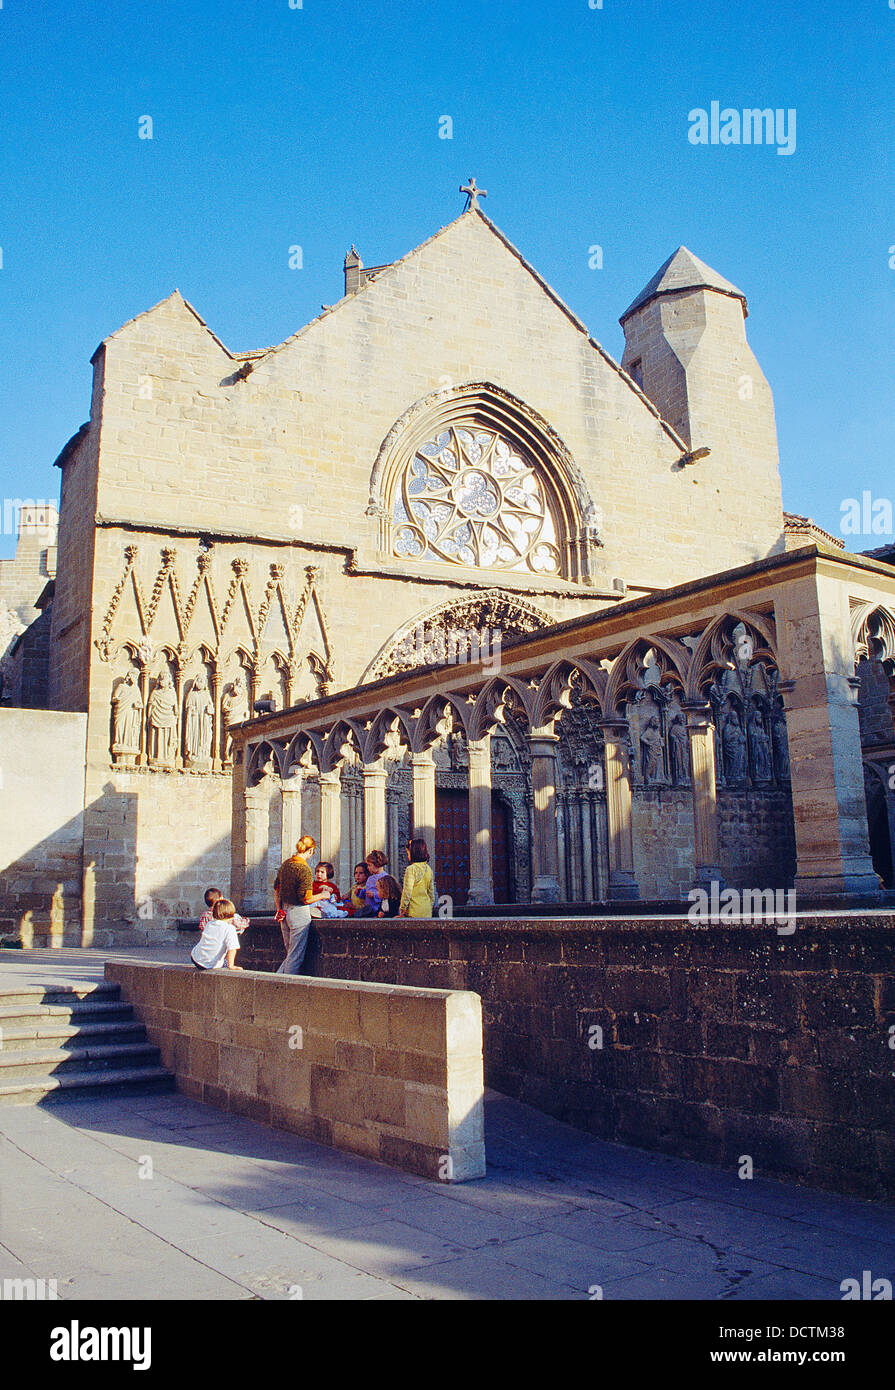 Facade of Santa Maria church. Olite, Navarra, Spain. Stock Photo